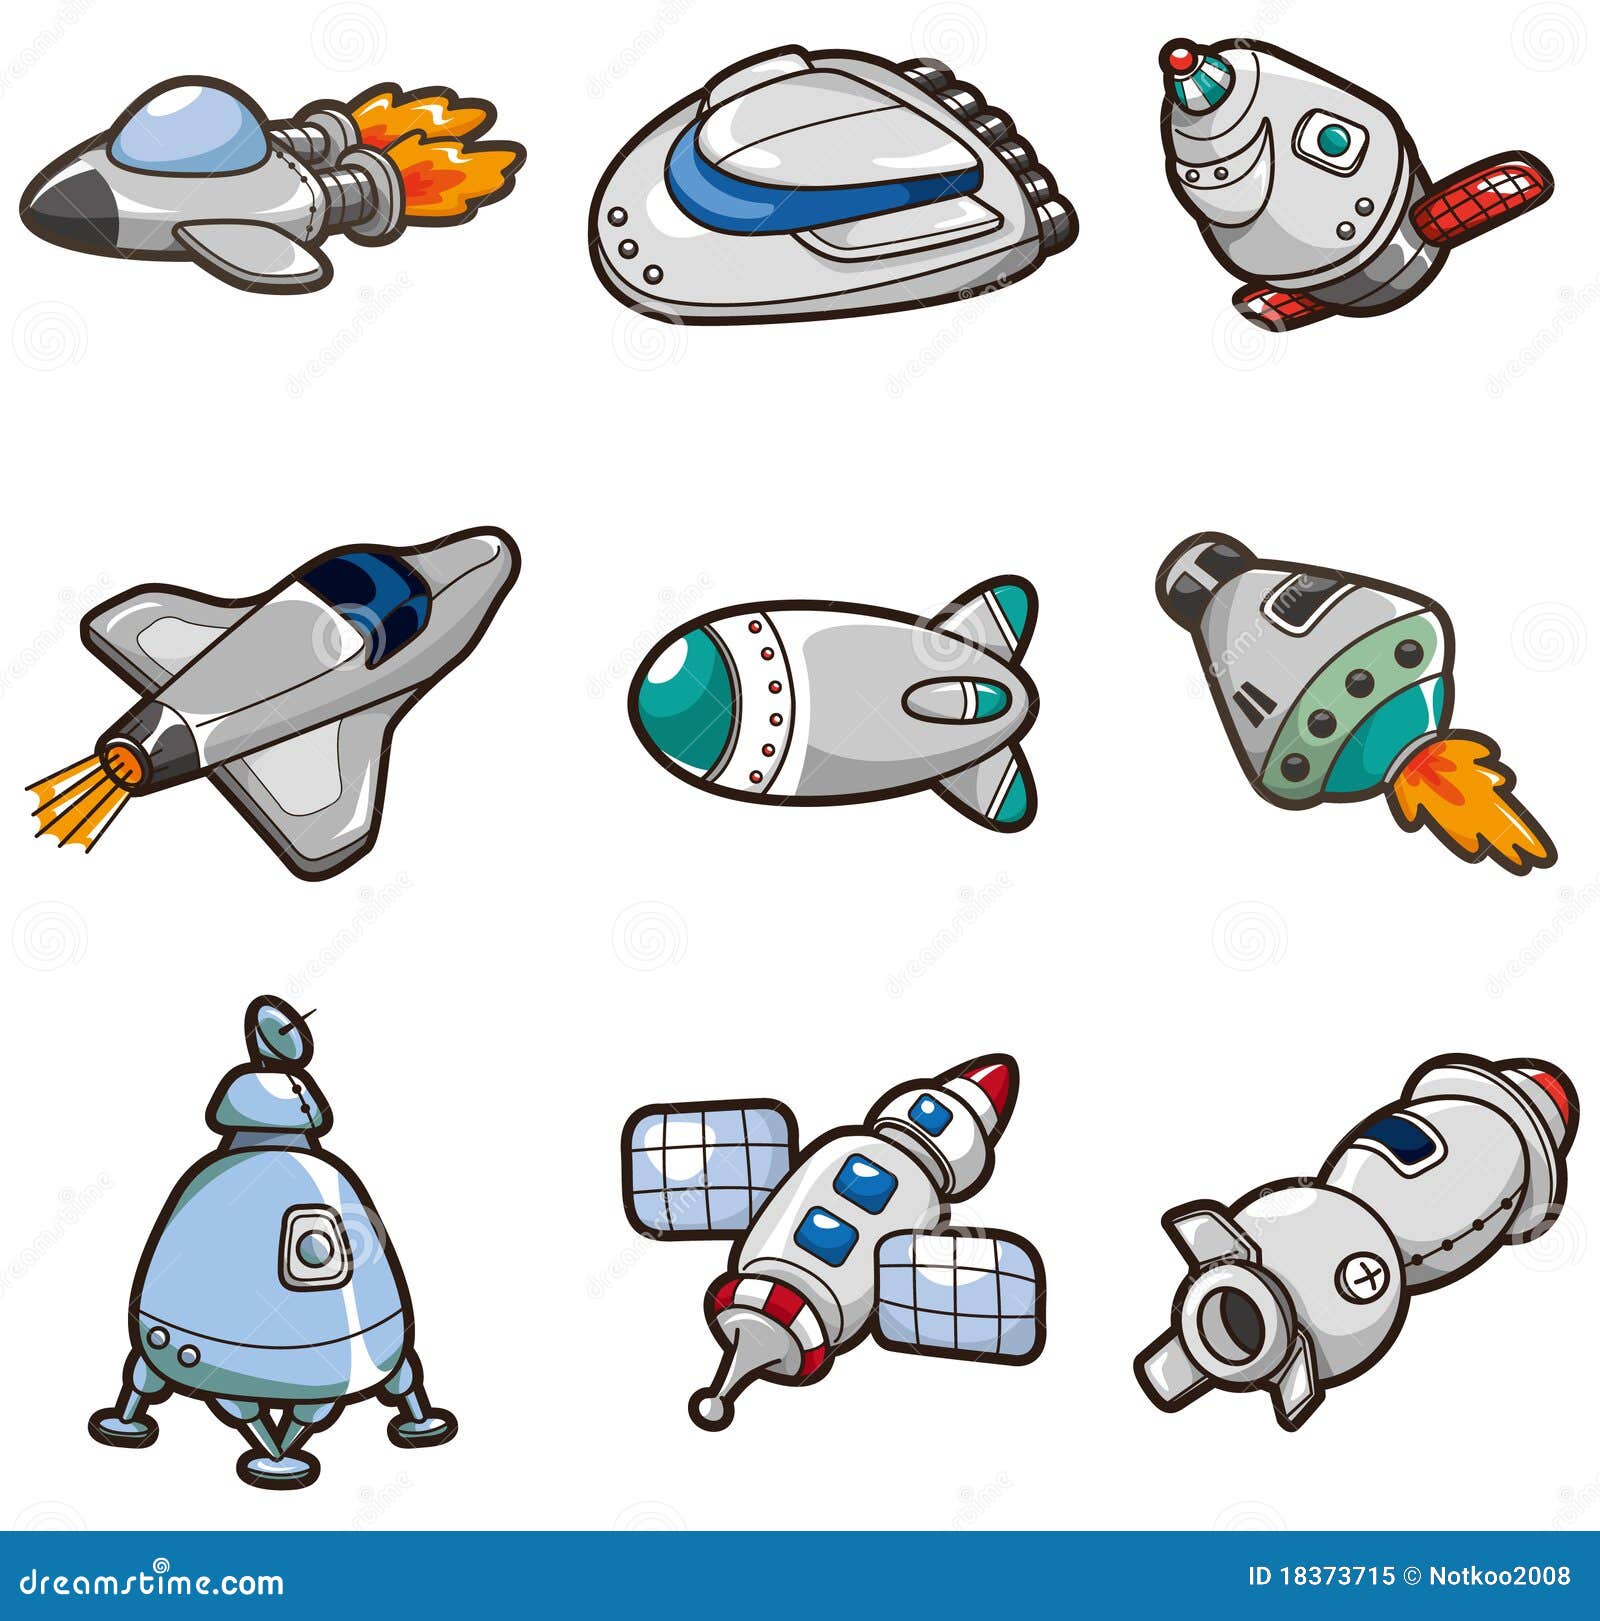 Cartoon spaceship icon stock vector. Illustration of shape - 18373715